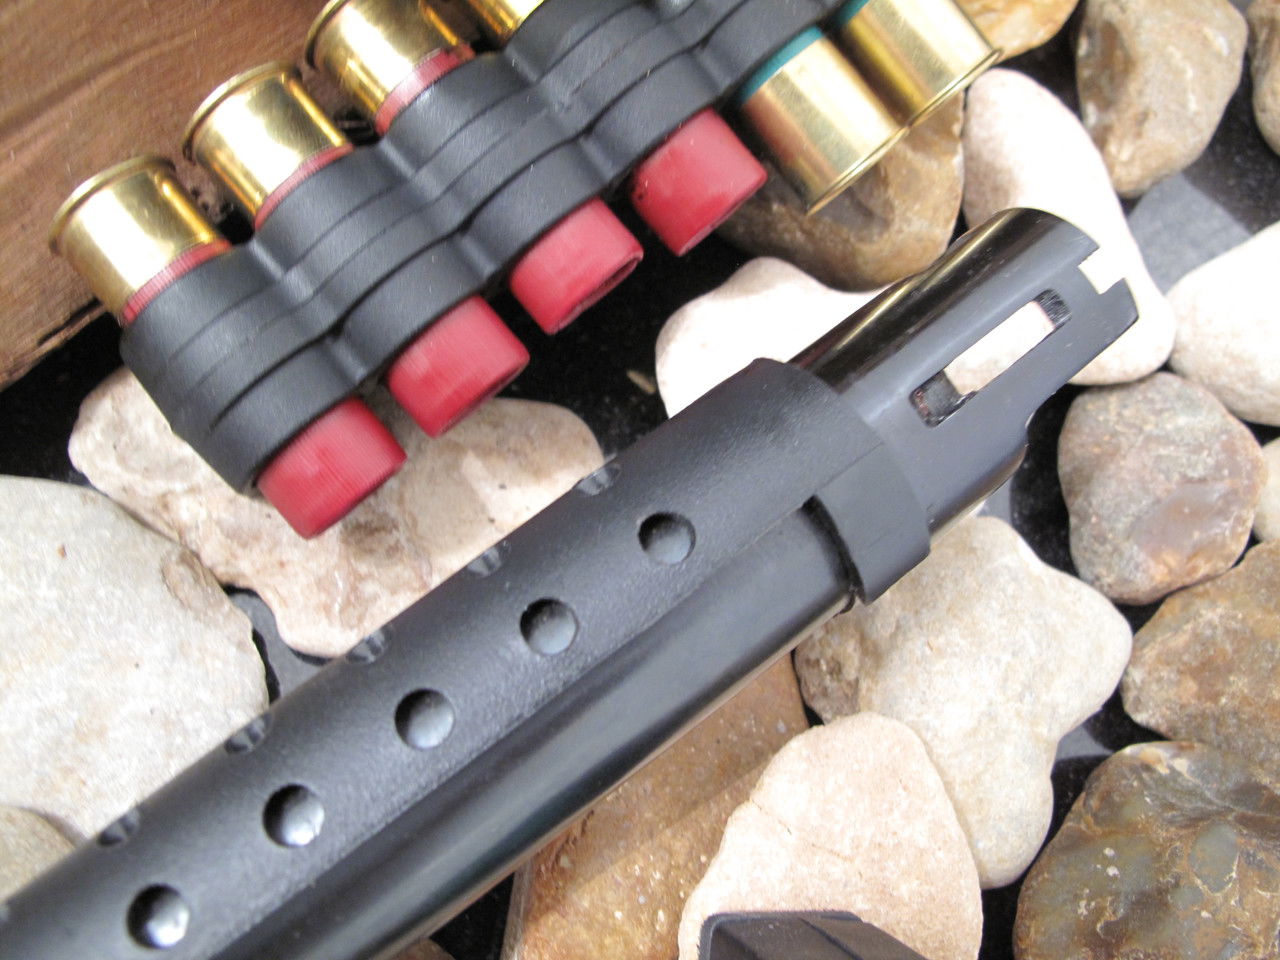 Pardner Pump Heat Shield Is Designed For Pump Action Shotguns!